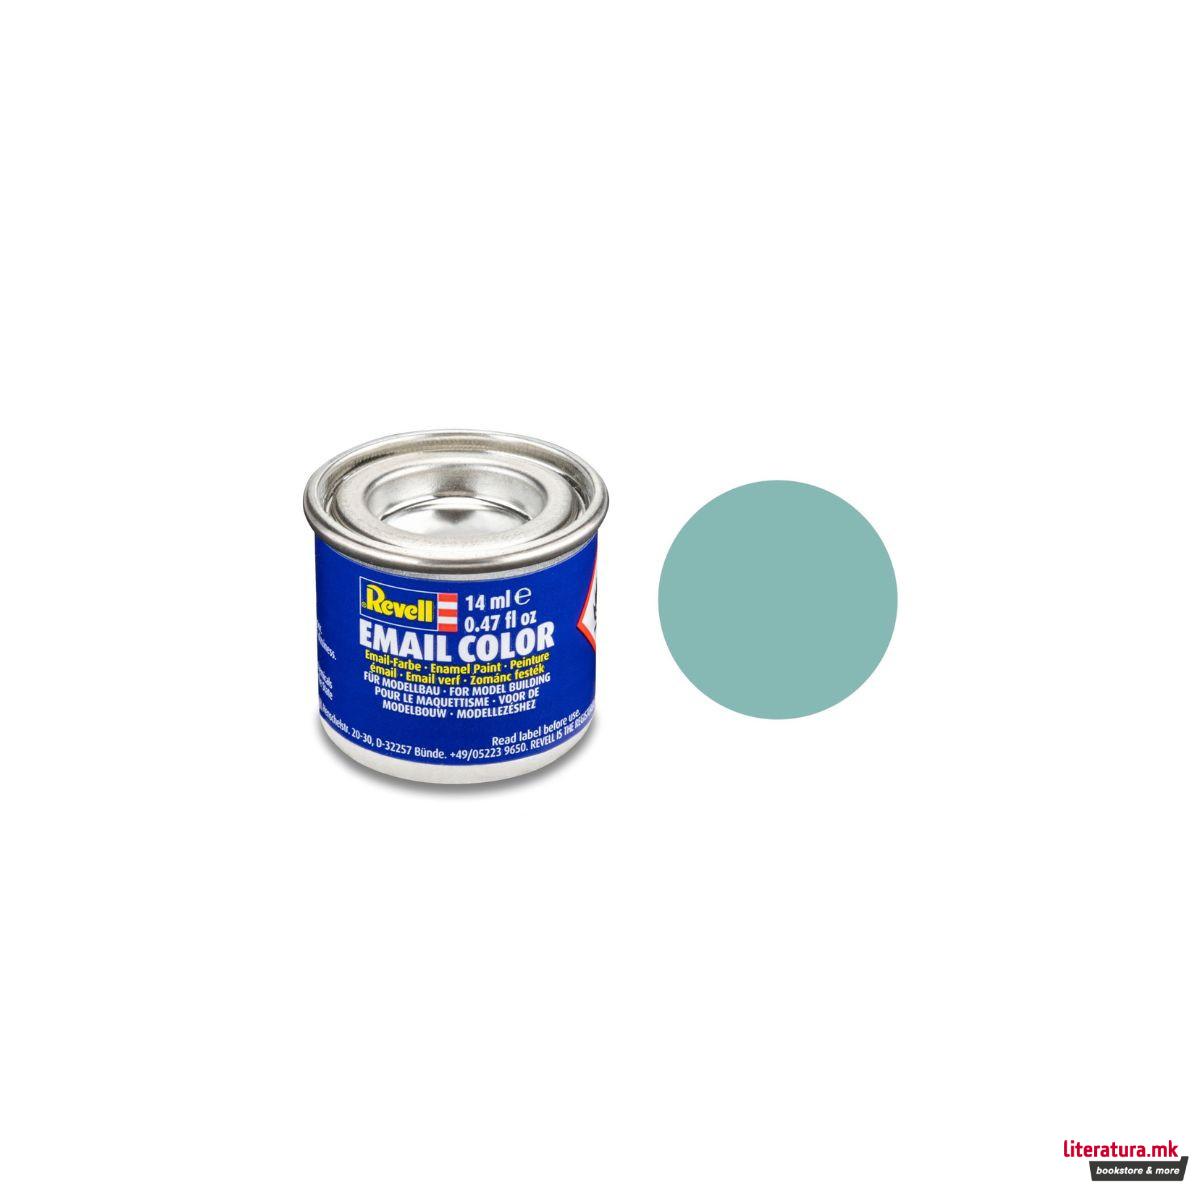 Боја за макета, Email Color Light Blue, мат, 14ml 